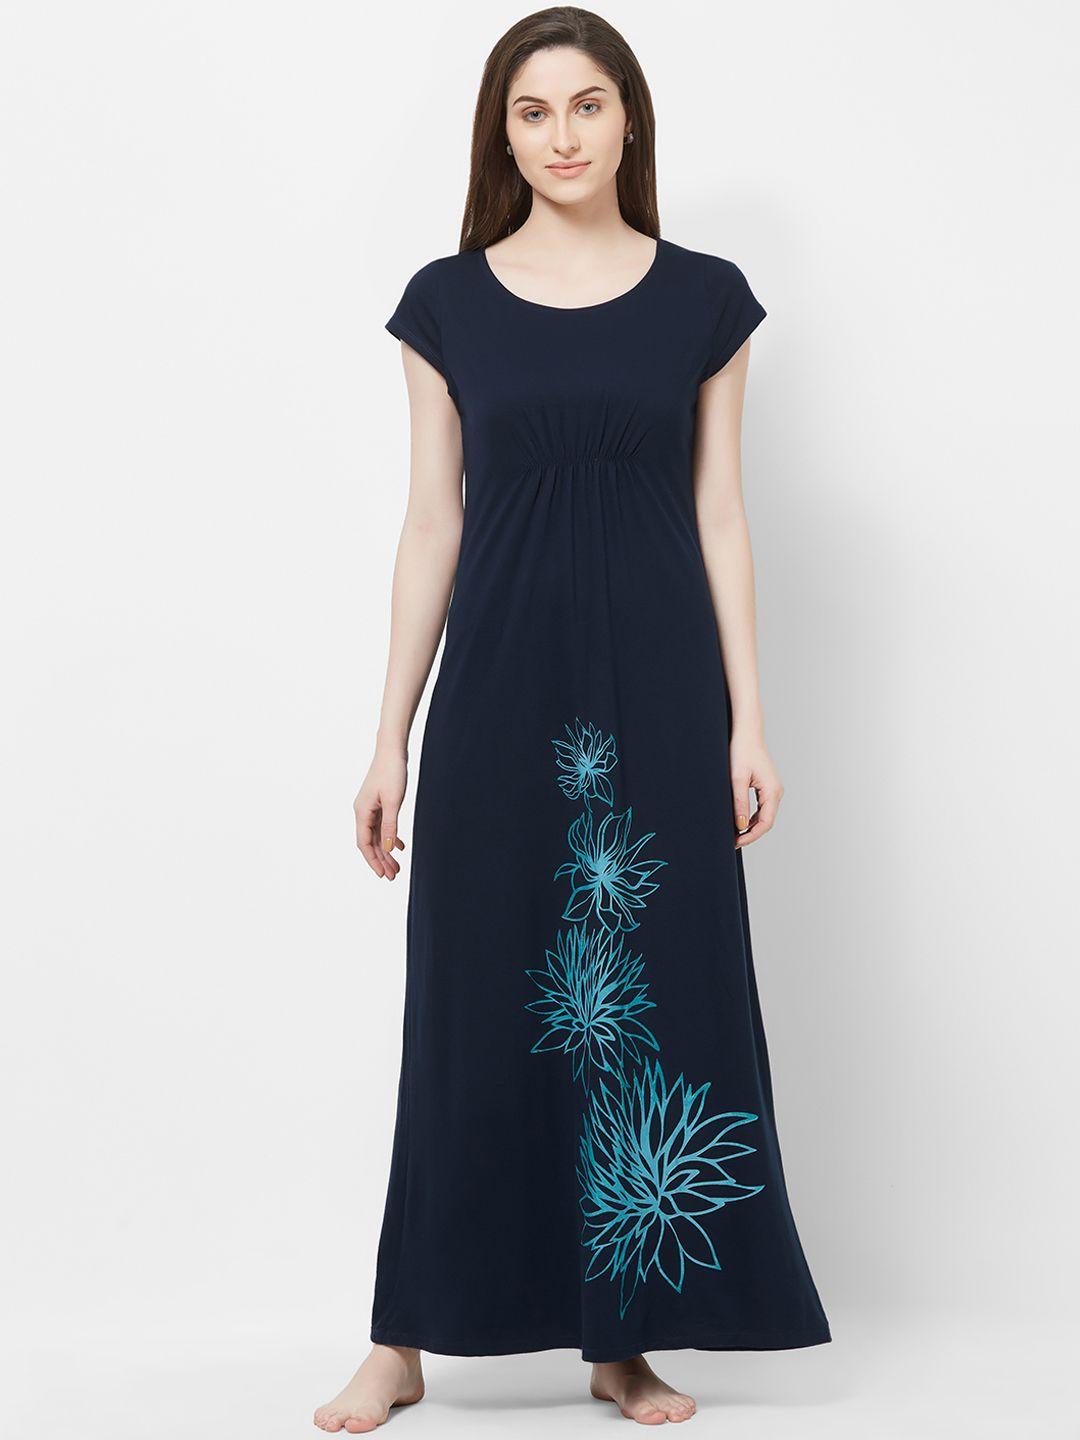 soie navy blue printed nightdress